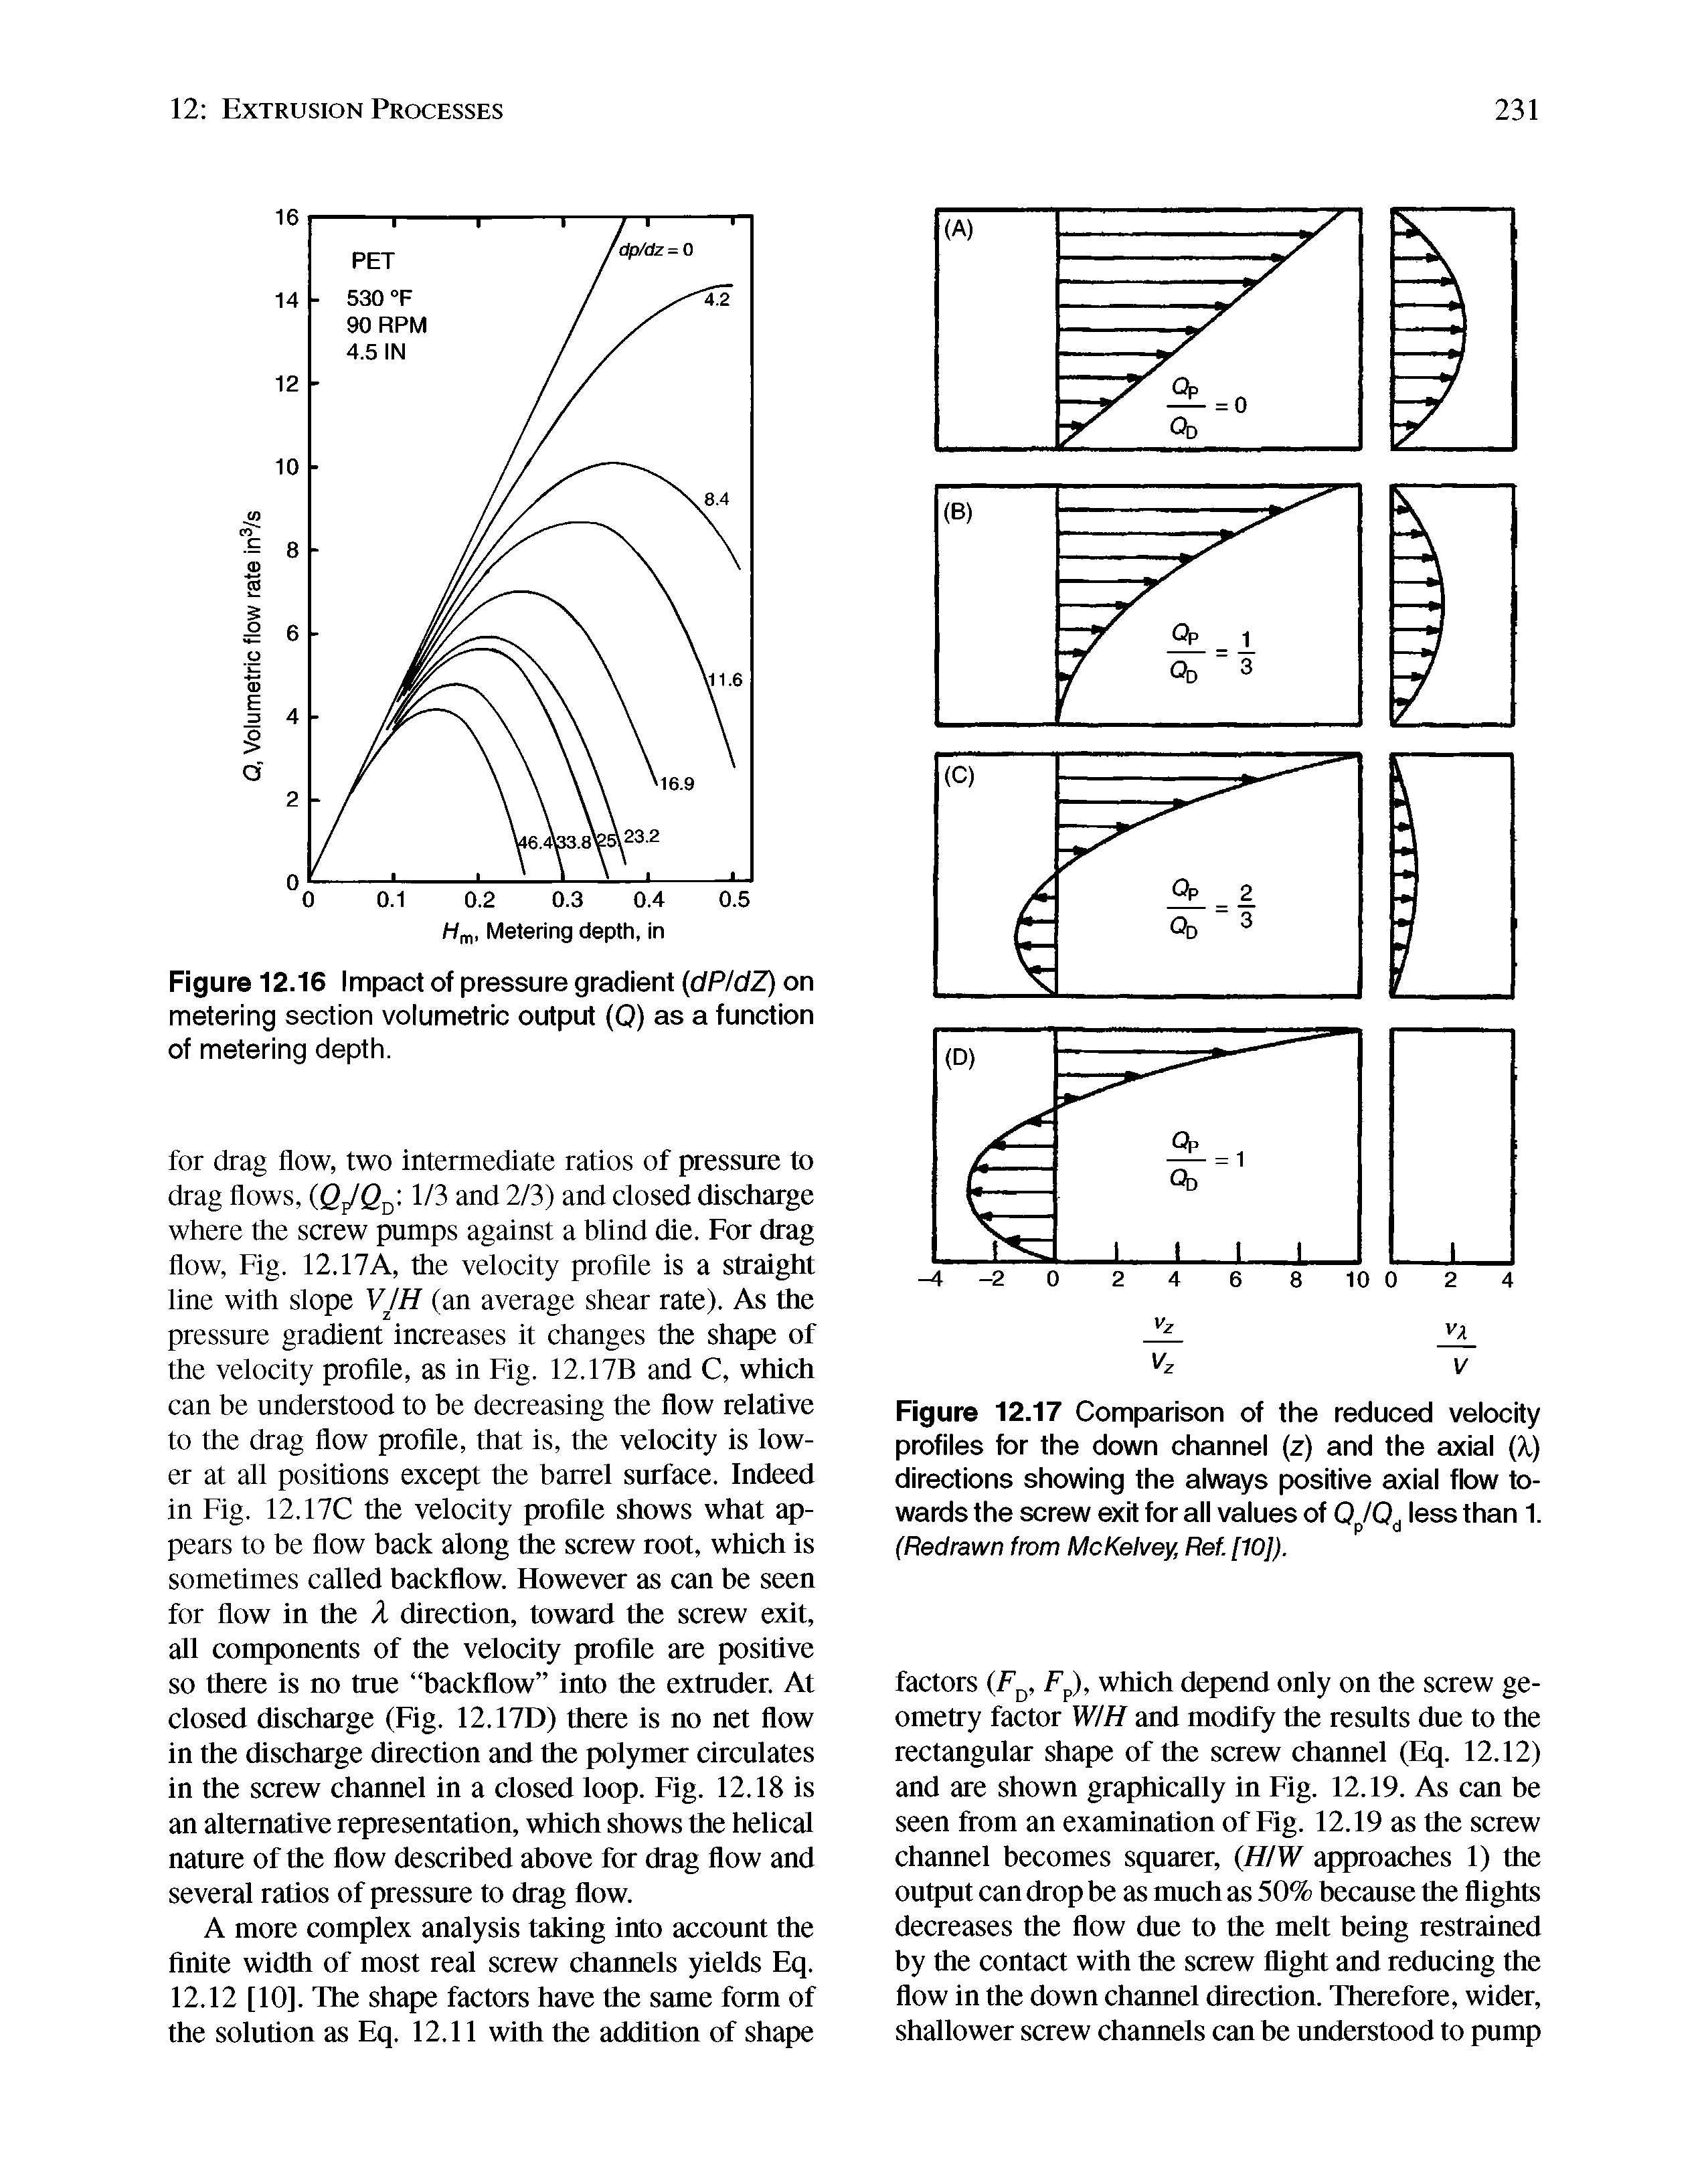 Figure 12.16 Impact of pressure gradient (dP/dZ) on metering section volumetric output (0) as a function of metering depth.